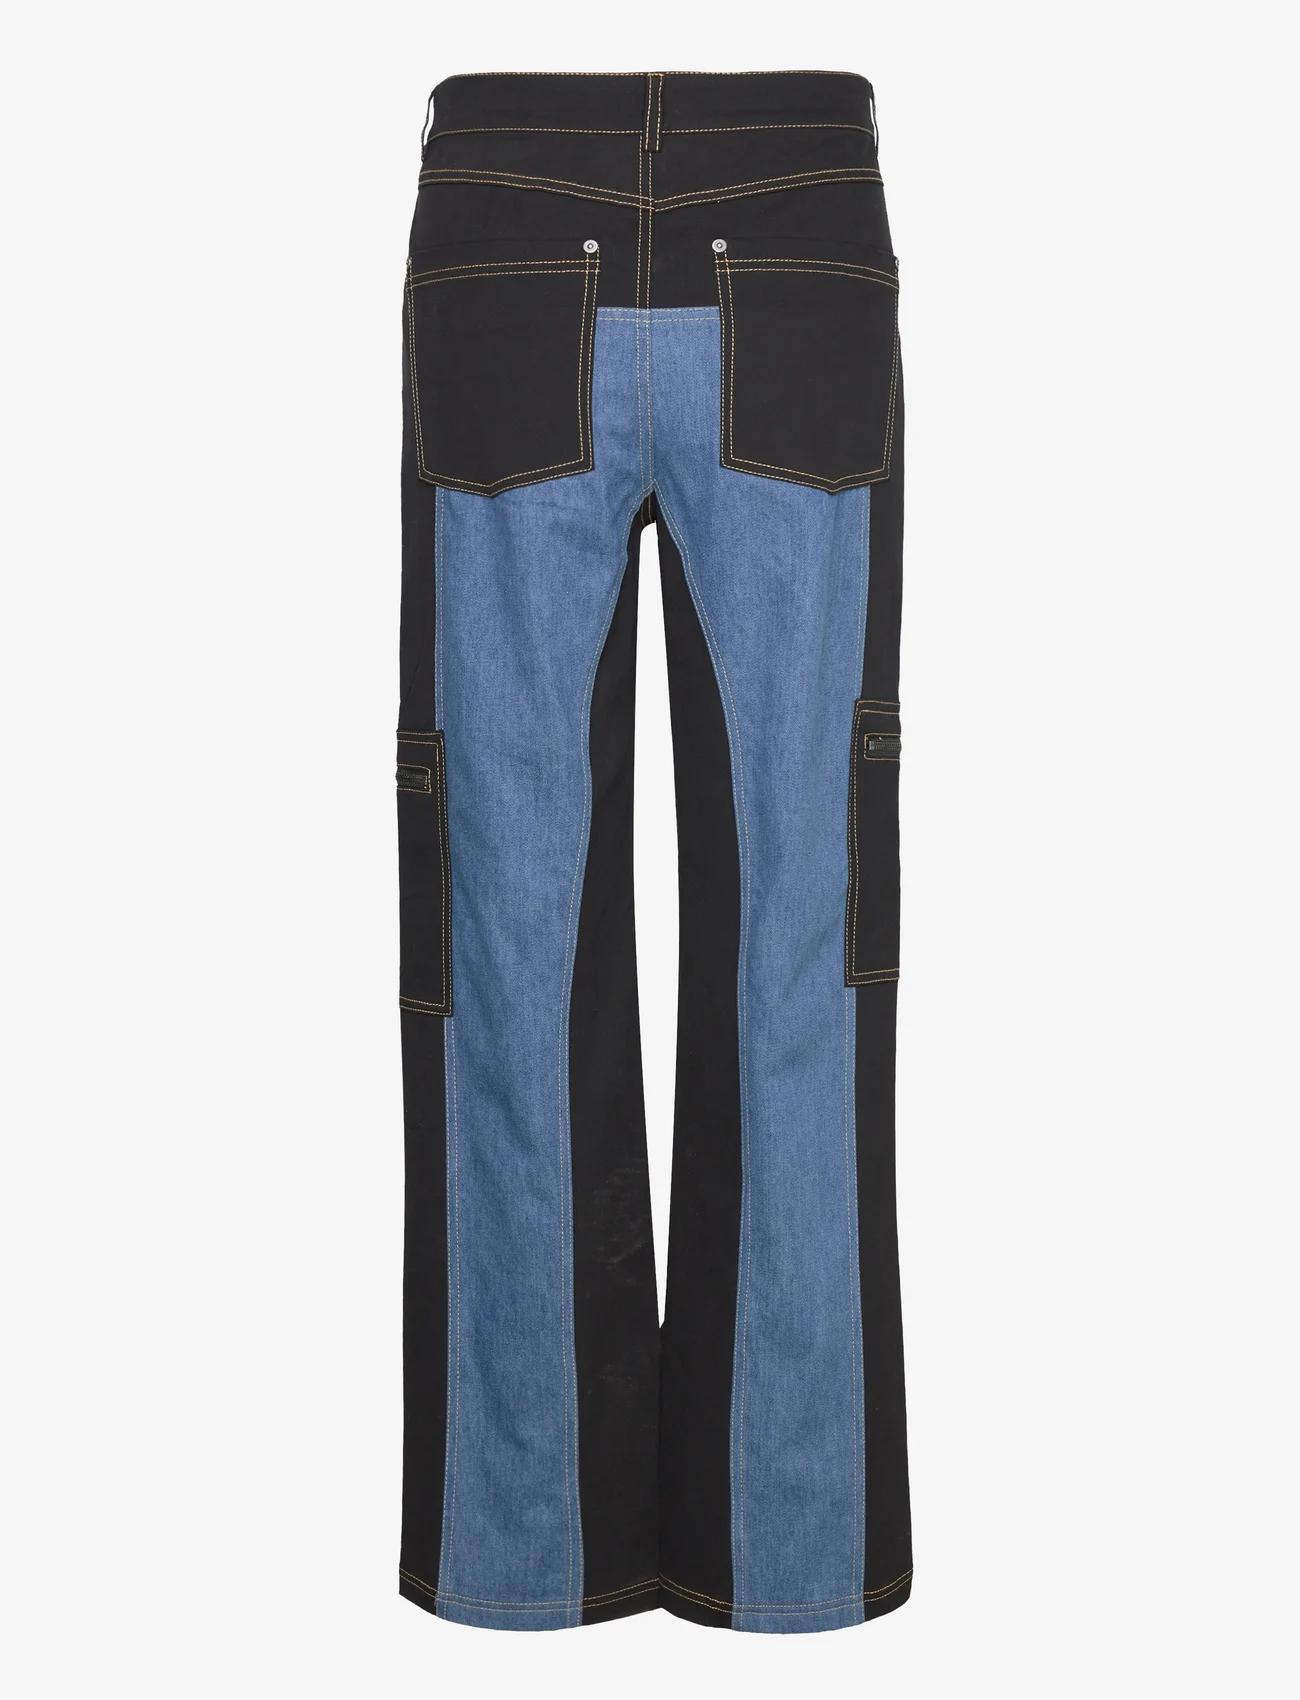 Sofie Schnoor - Trousers - vida jeans - black - 1